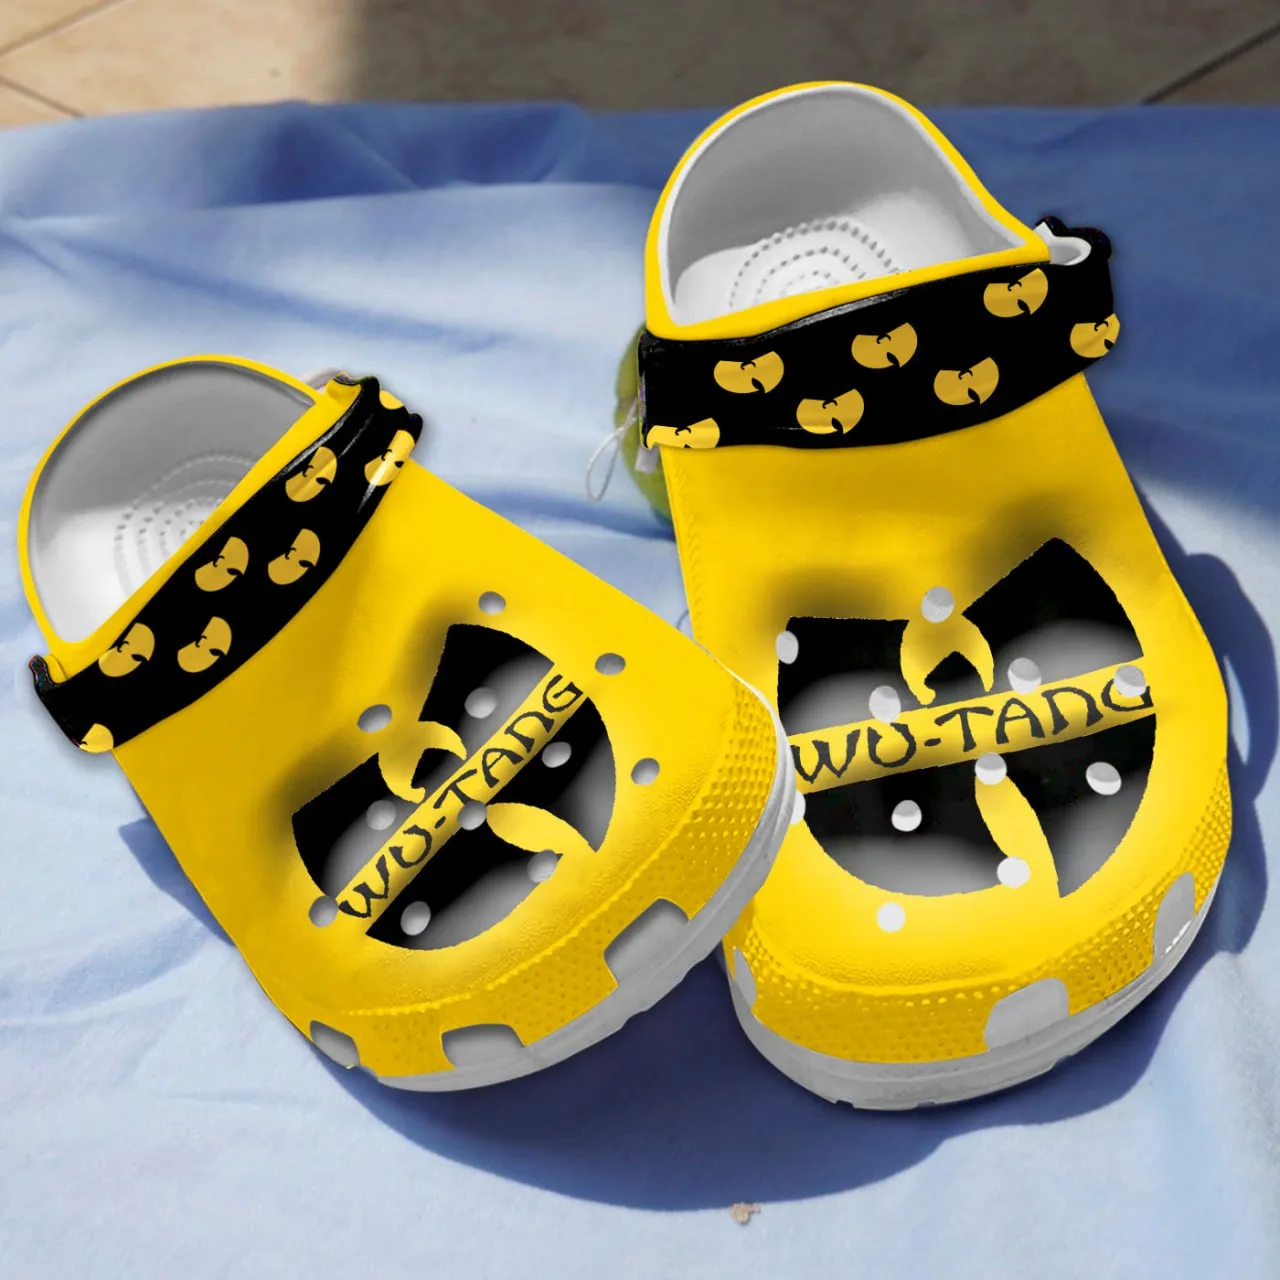 wu tang clan logo crocs shoes gift for fans of wu tang clan slippers